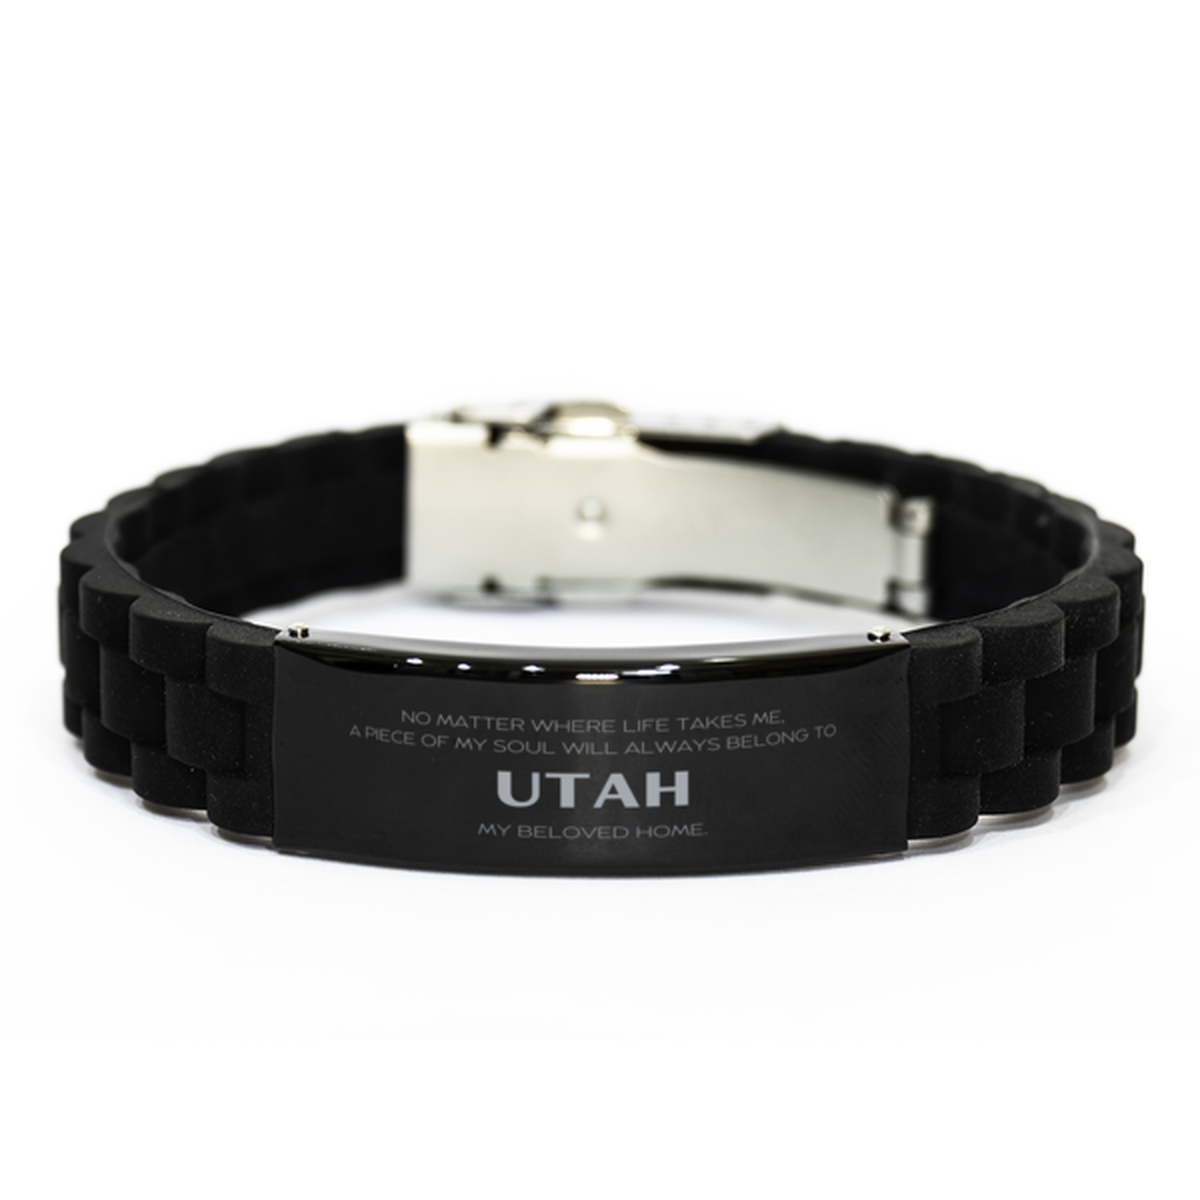 Love Utah State Gifts, My soul will always belong to Utah, Proud Black Glidelock Clasp Bracelet, Birthday Unique Gifts For Utah Men, Women, Friends